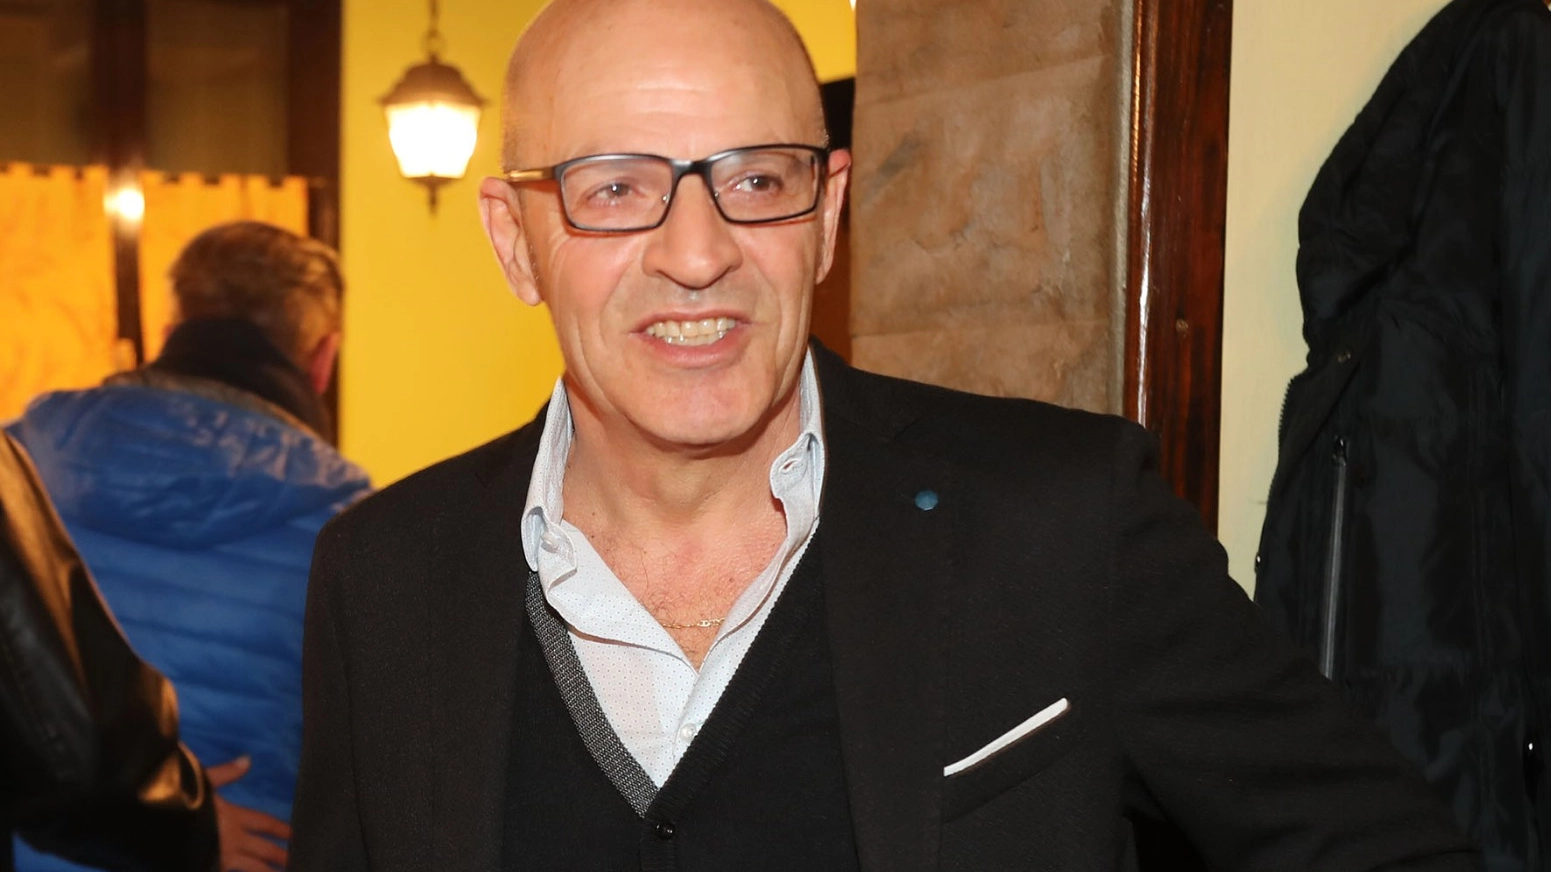 Giuseppe Palazzolo, candidato sindaco del centrodestra (Isolapress)